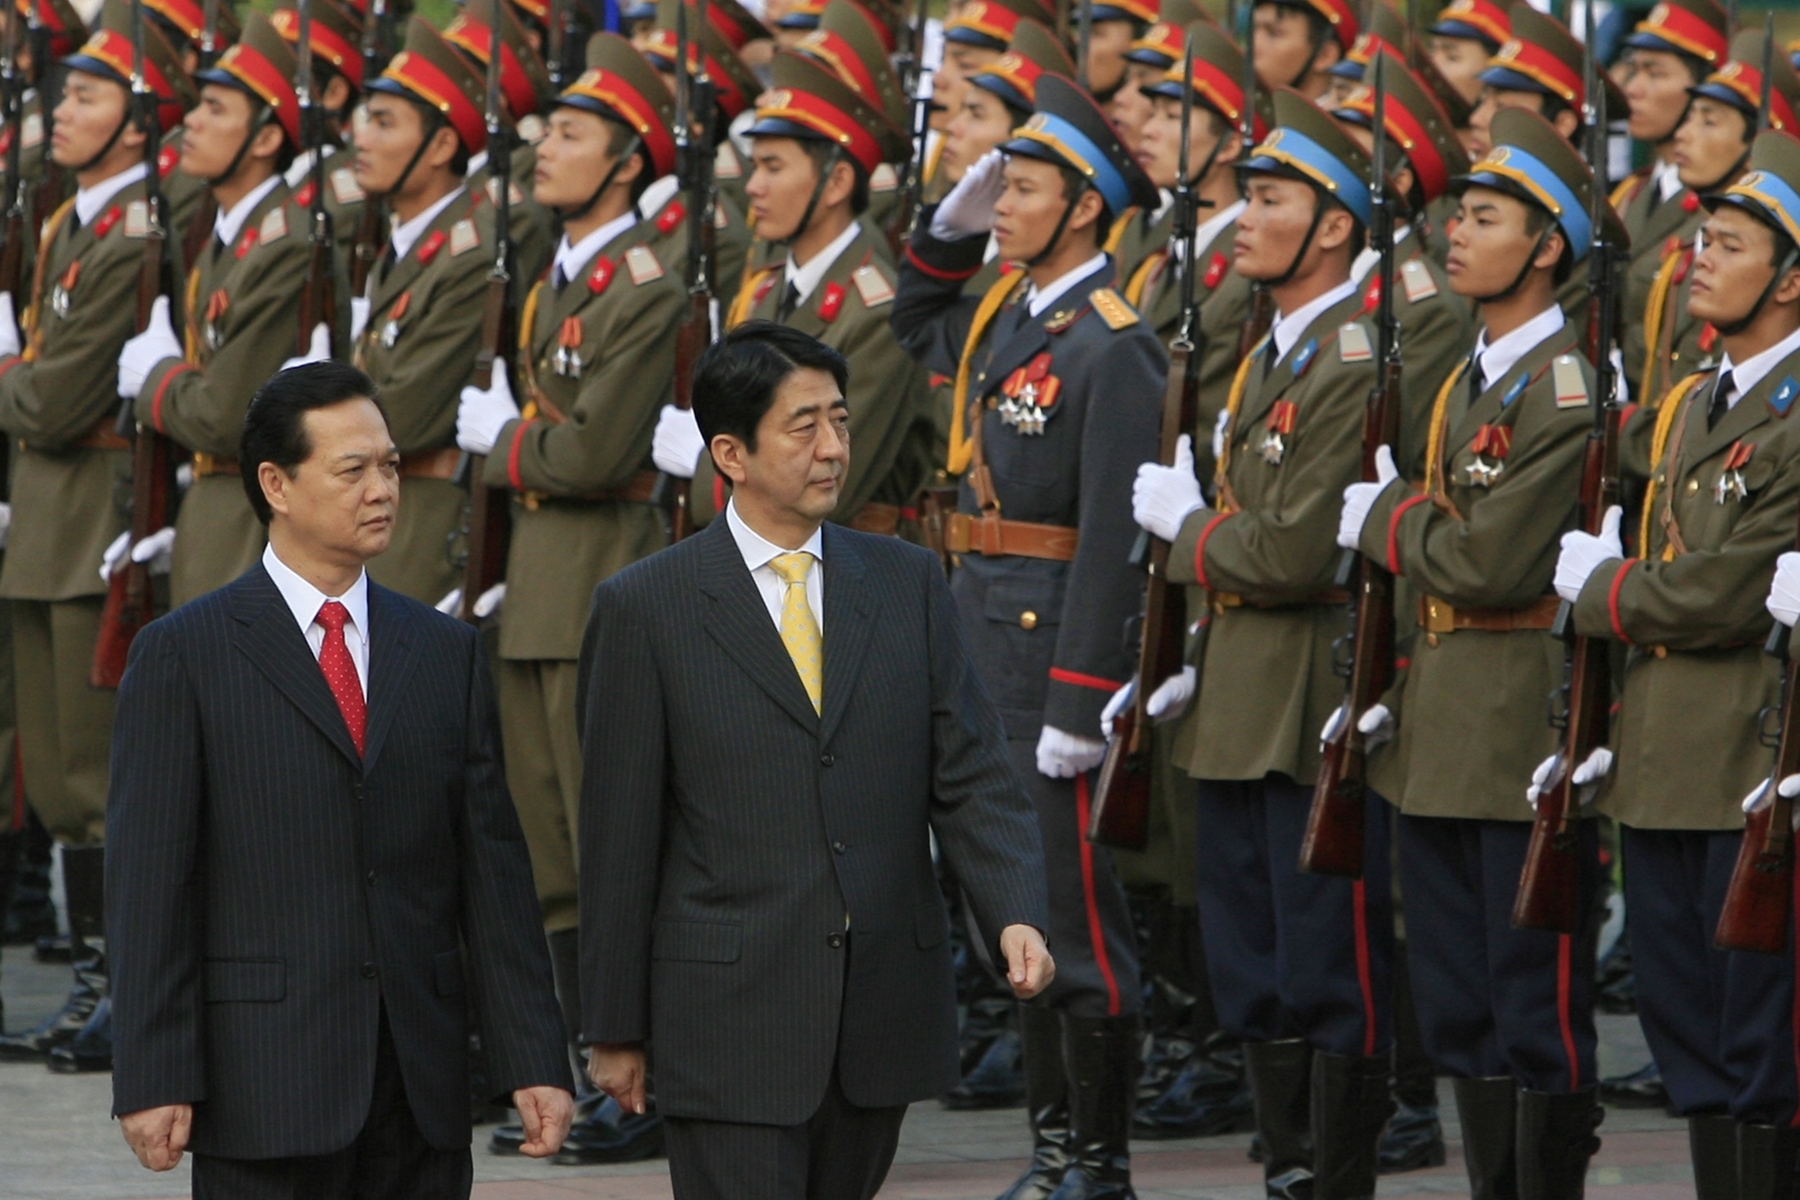 VietNam – Abe has visited Vietnam four times